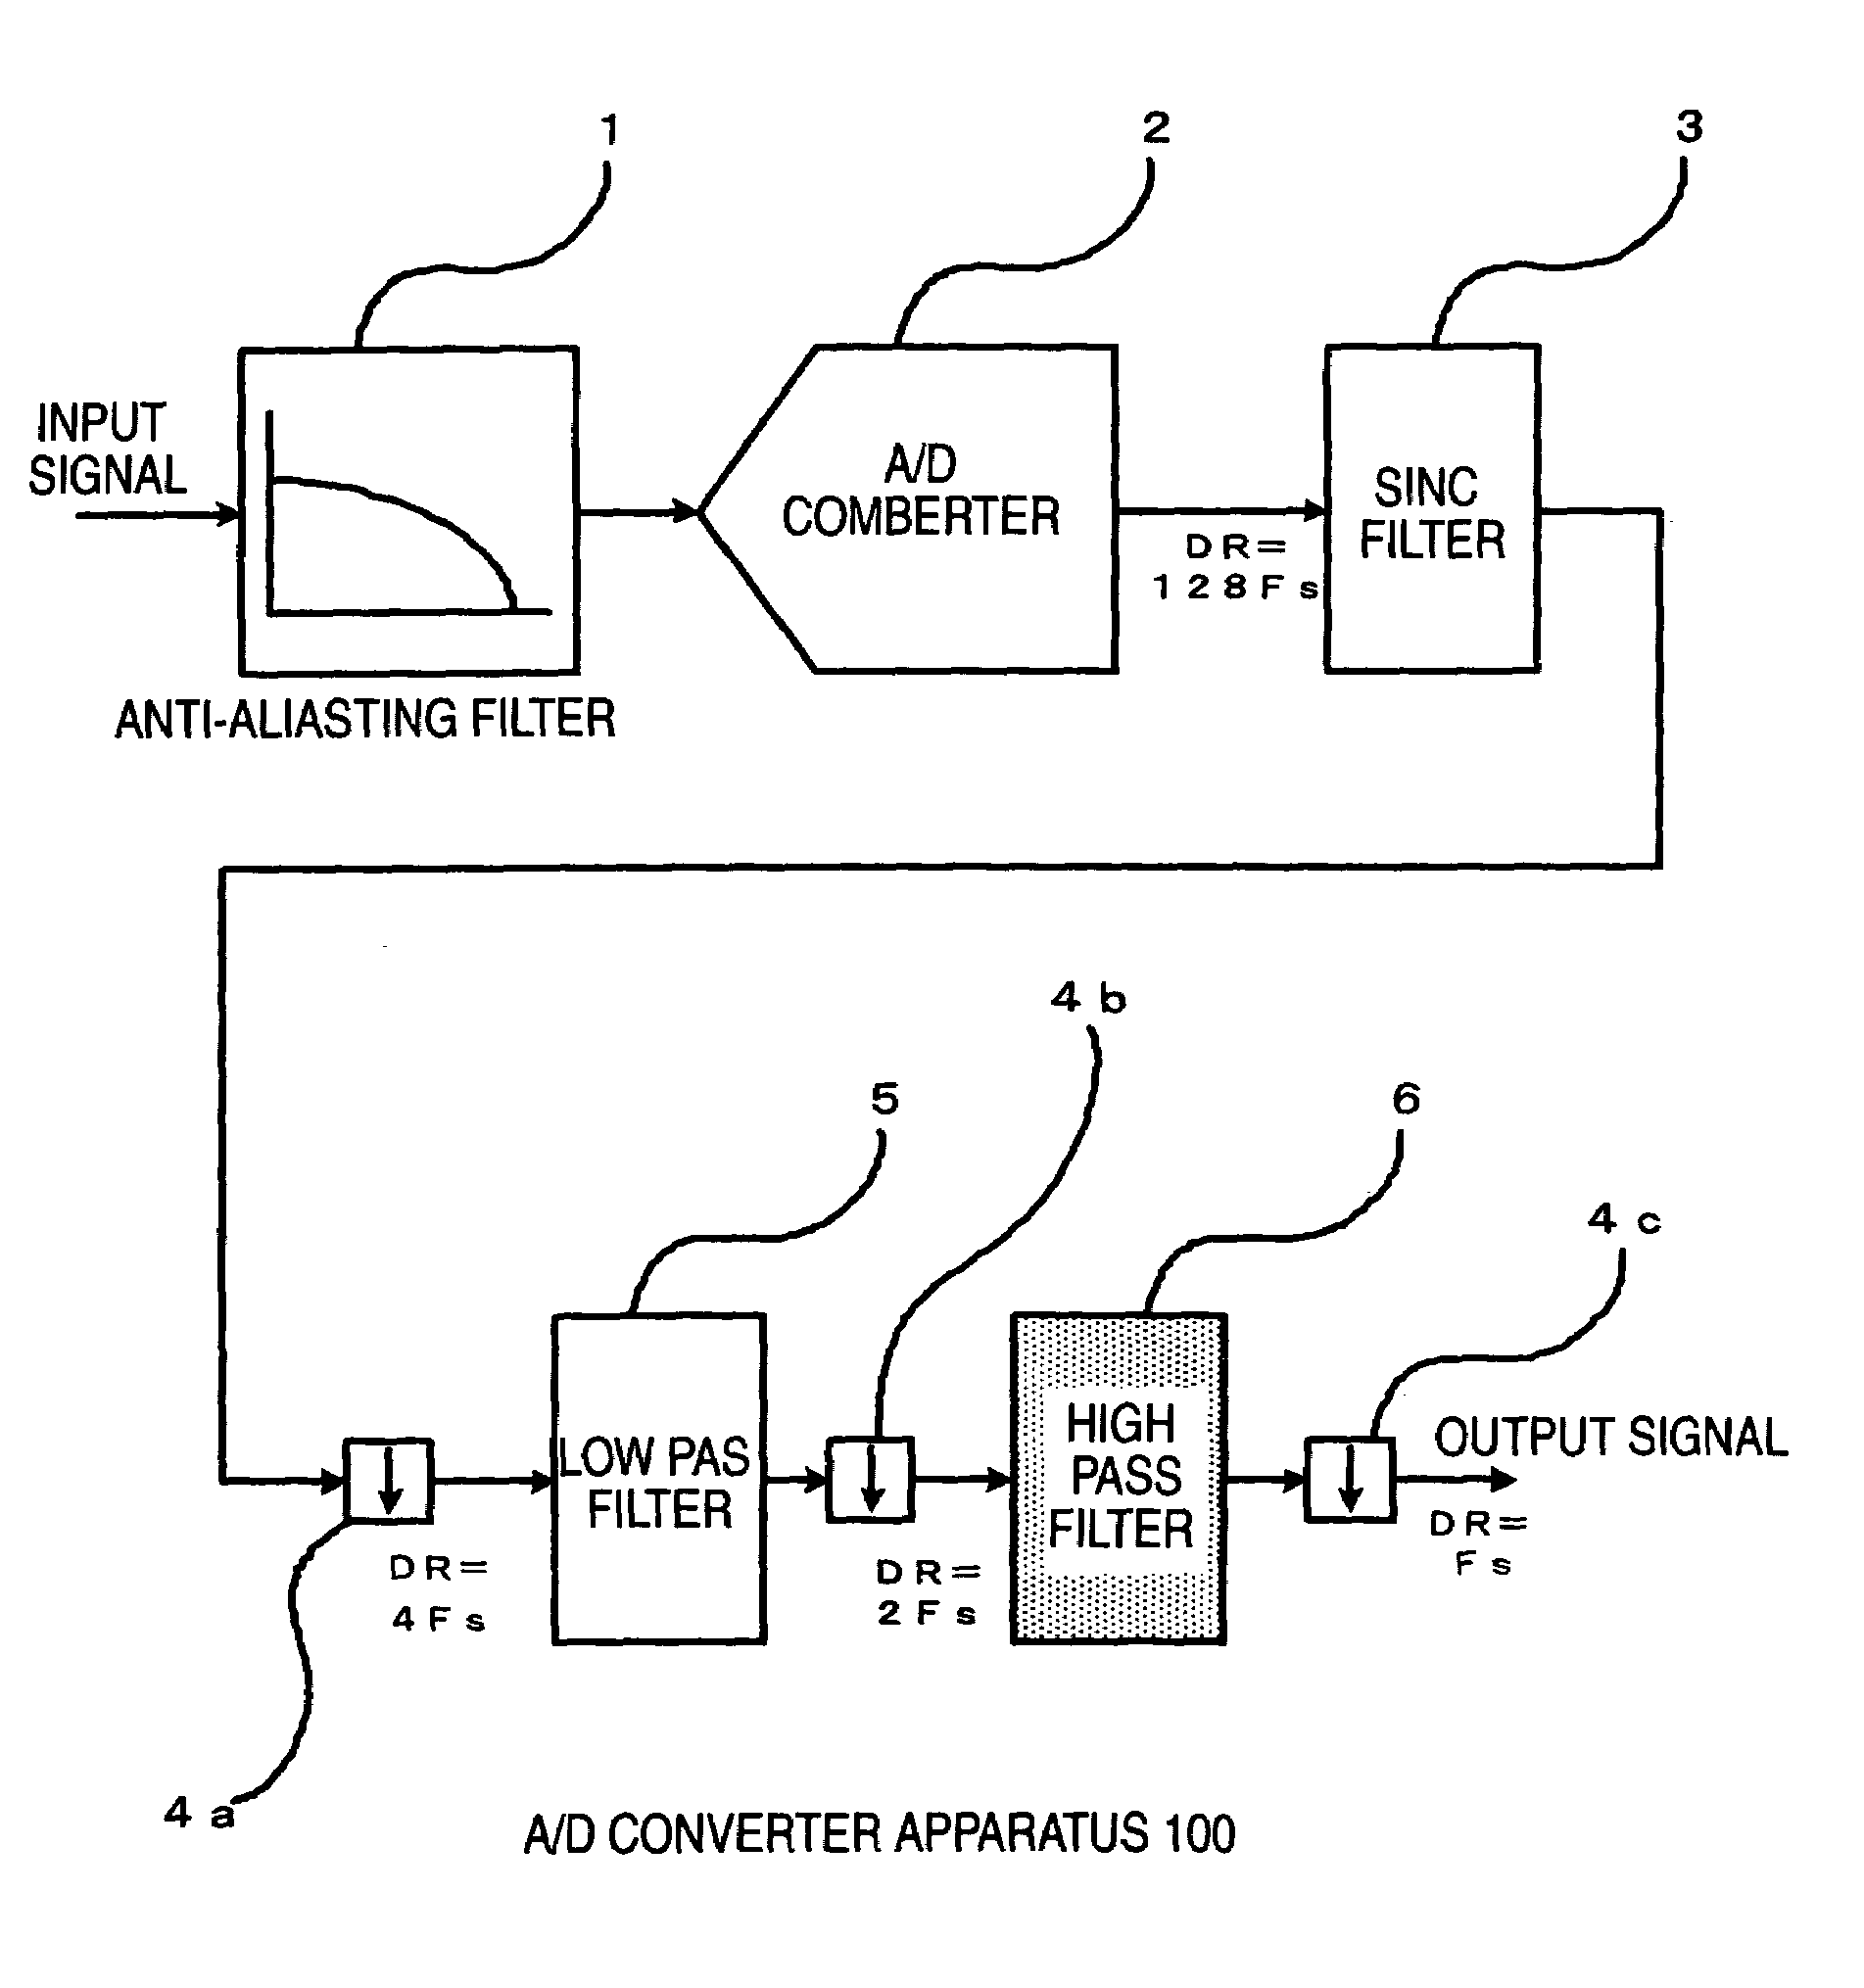 A/D converter apparatus and D/A converter apparatus including a digital filter